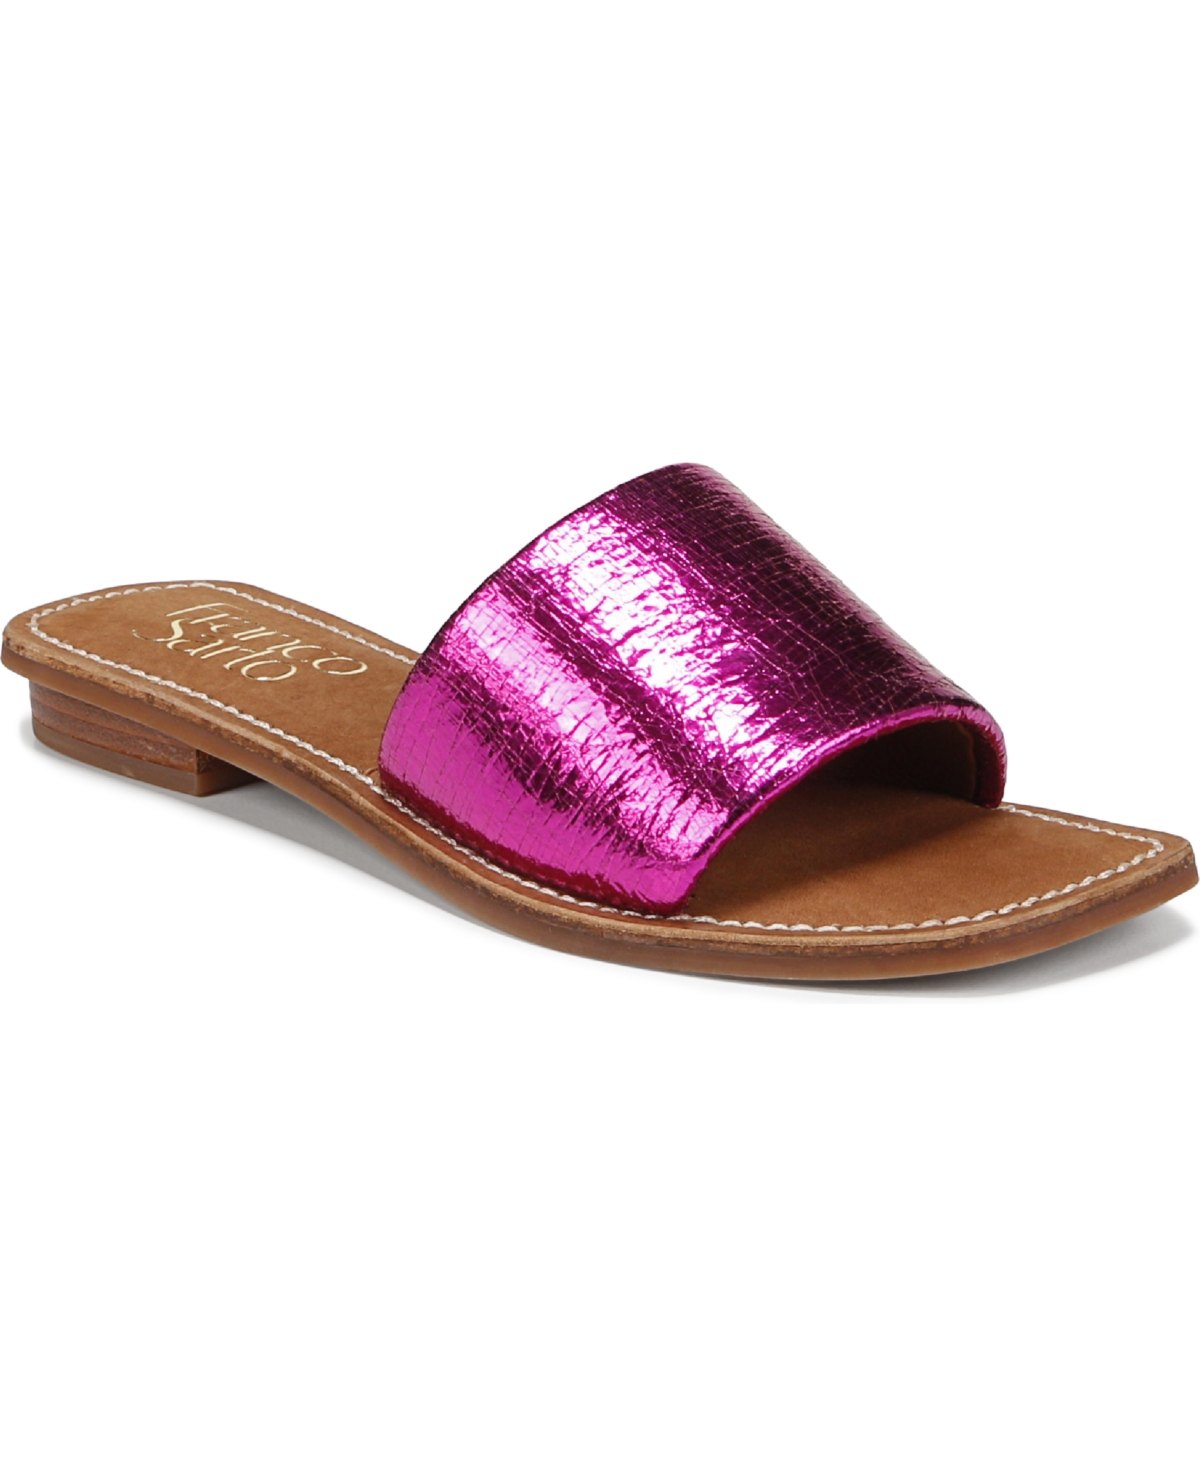 Women's Tina Slide Sandals - Metallic Pink Cracked Leather